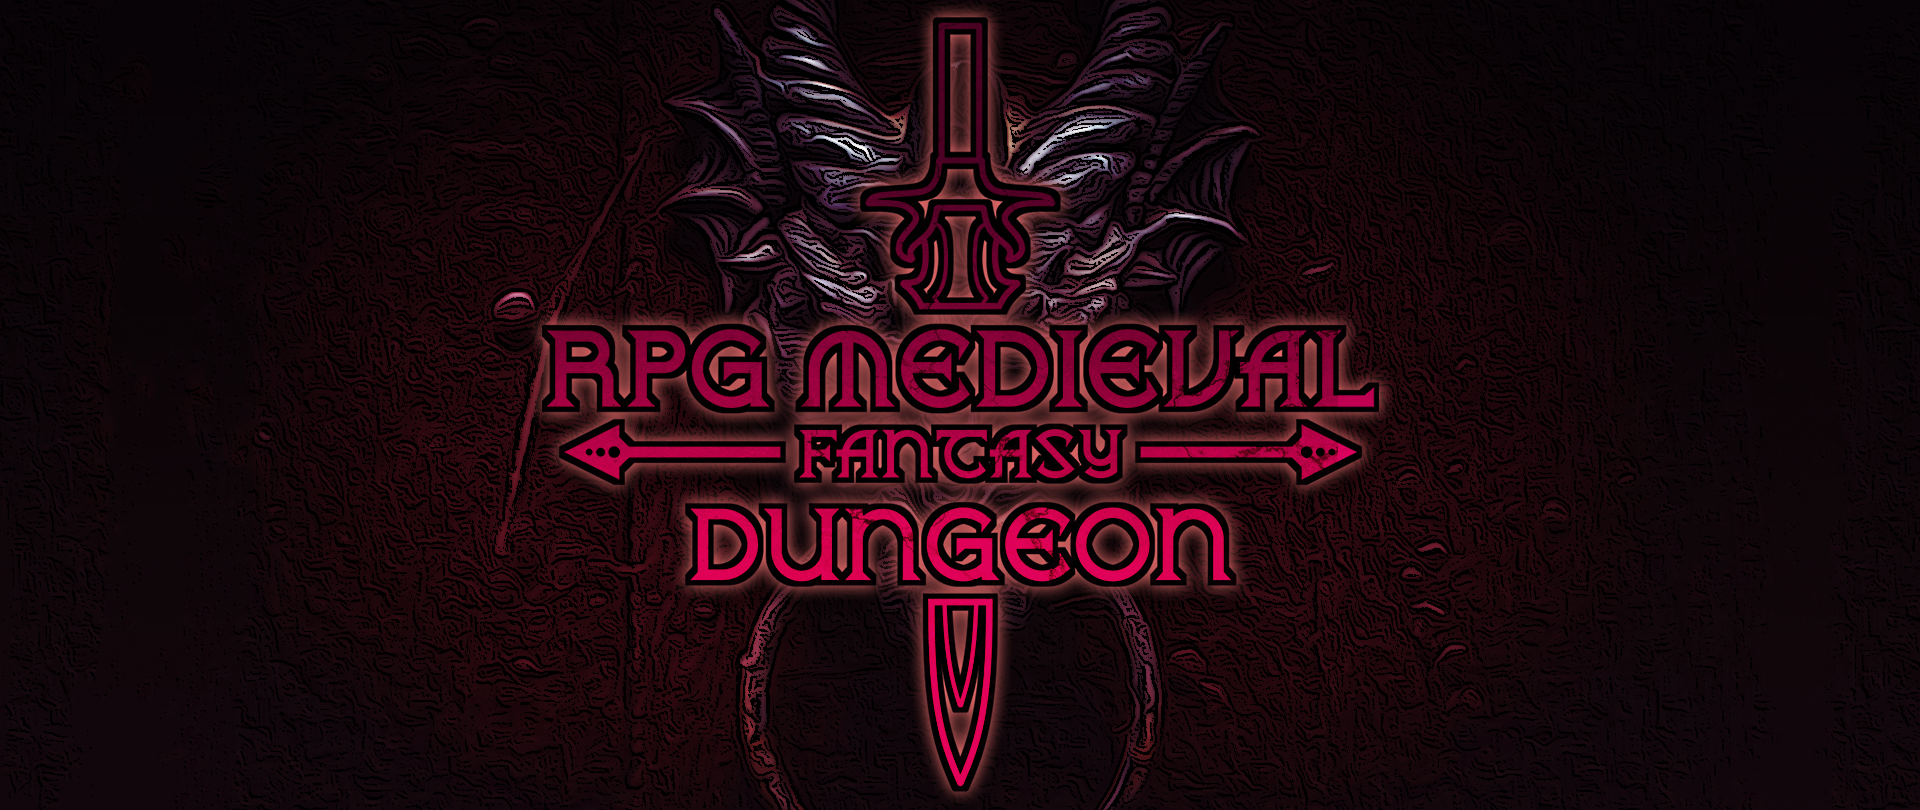 RPG Medieval Music - Dungeon